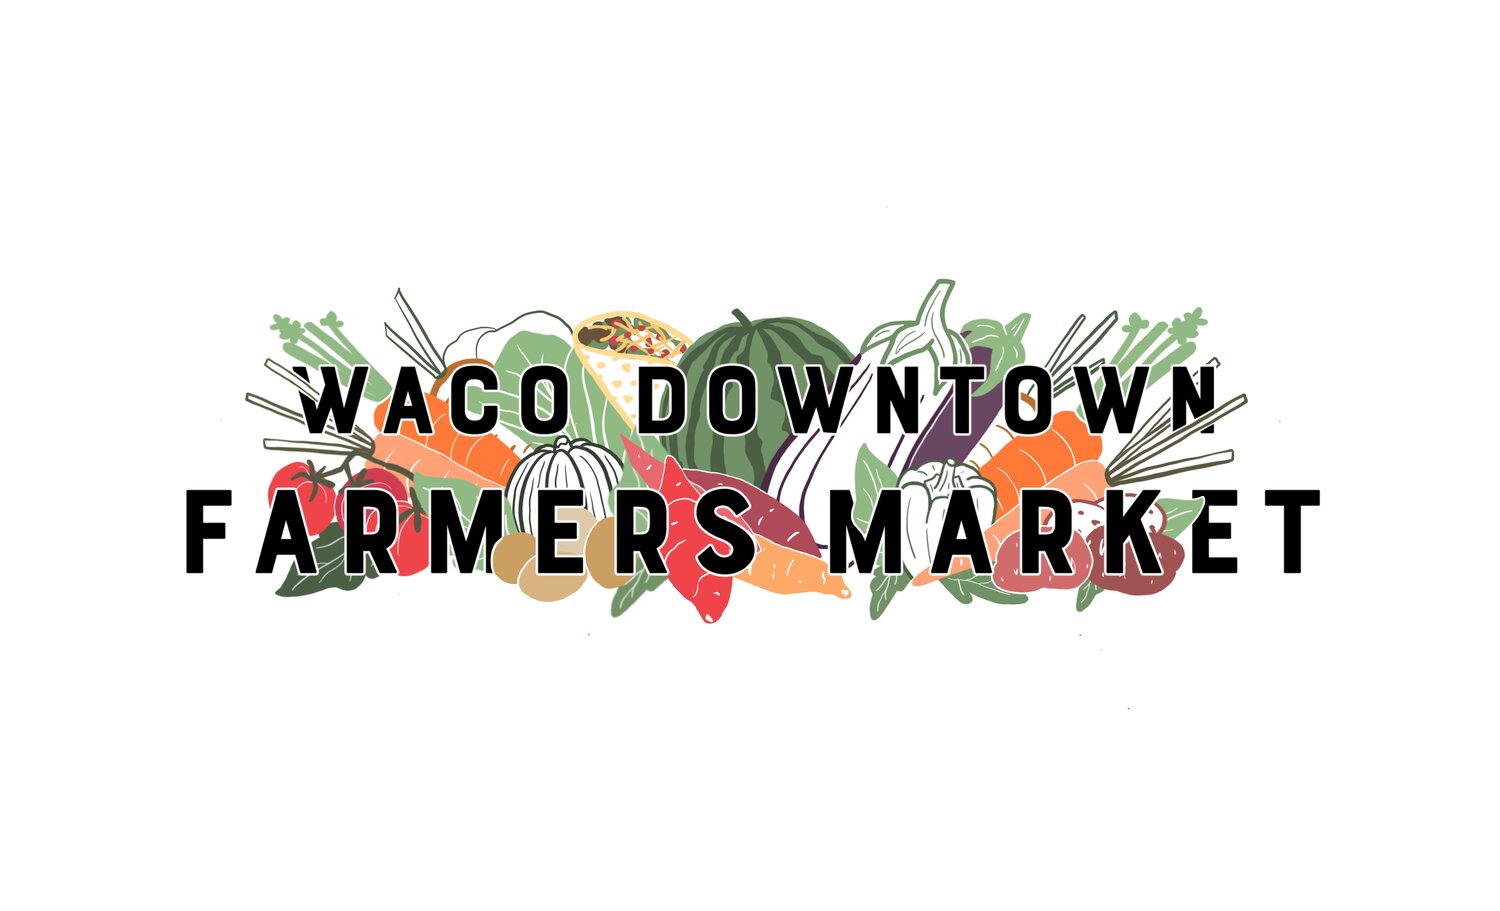 waco downtown farmers market